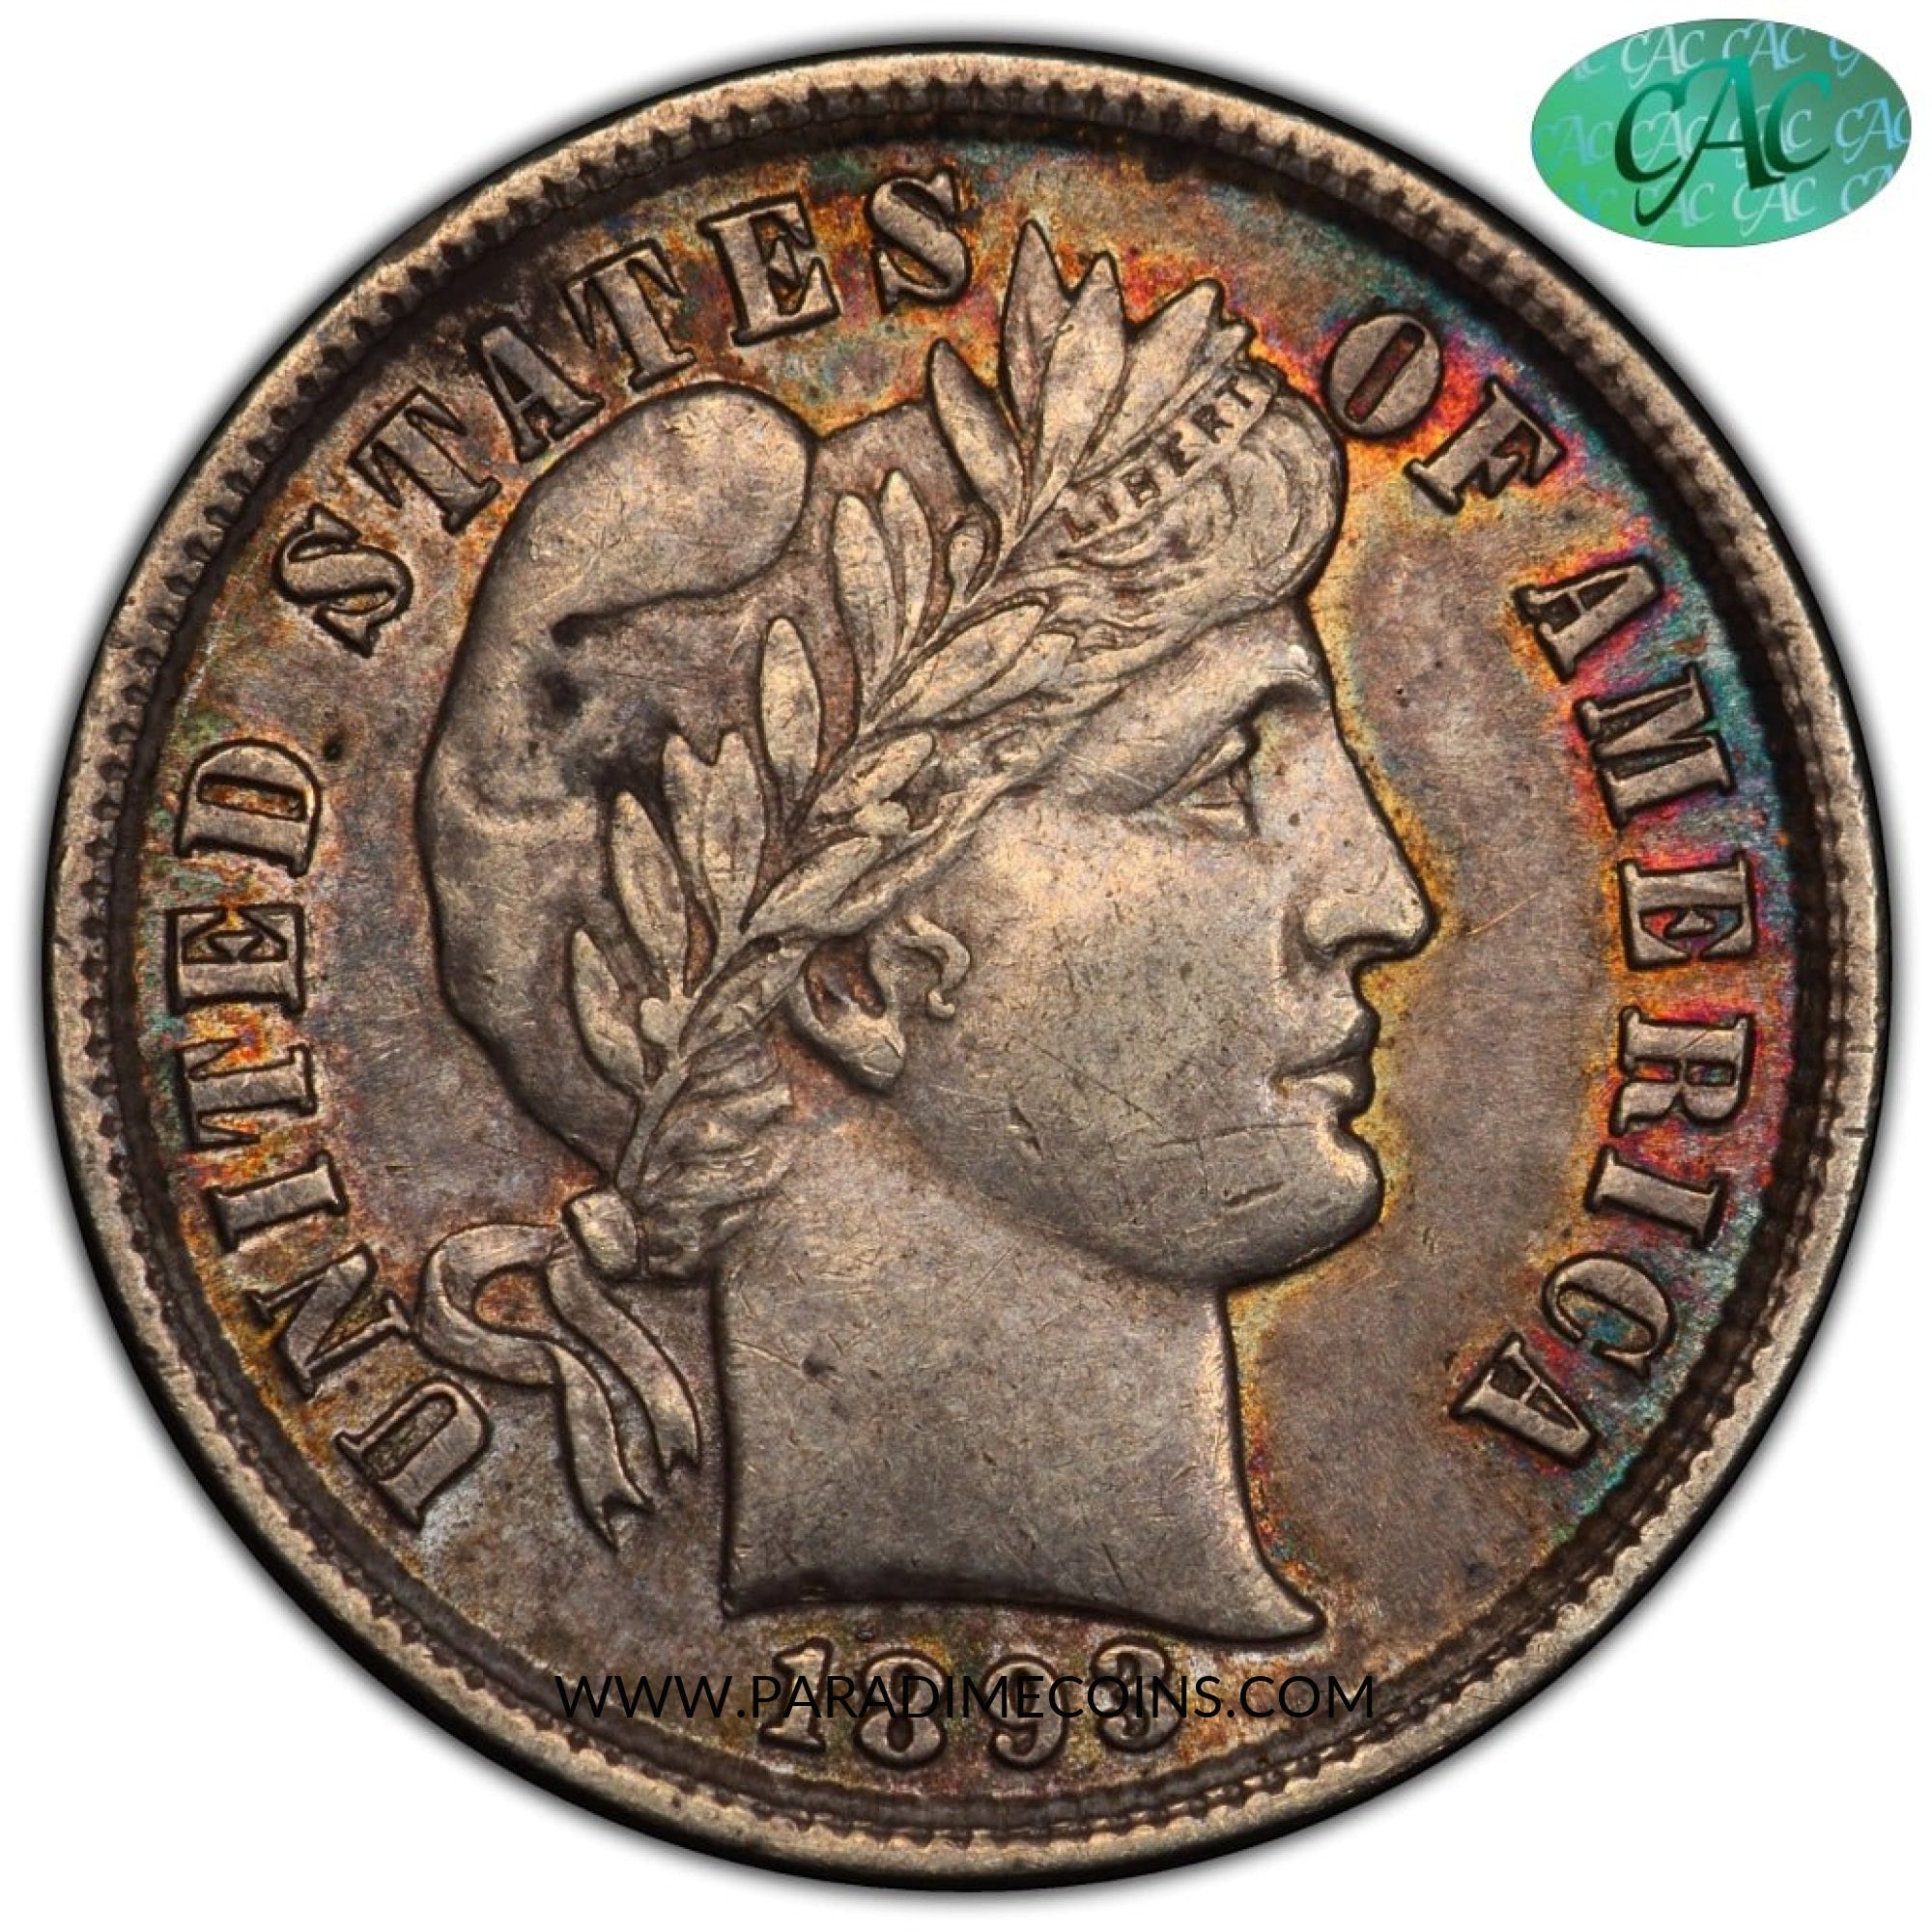 1893/2 10C AU53 PCGS CAC - Paradime Coins | PCGS NGC CACG CAC Rare US Numismatic Coins For Sale